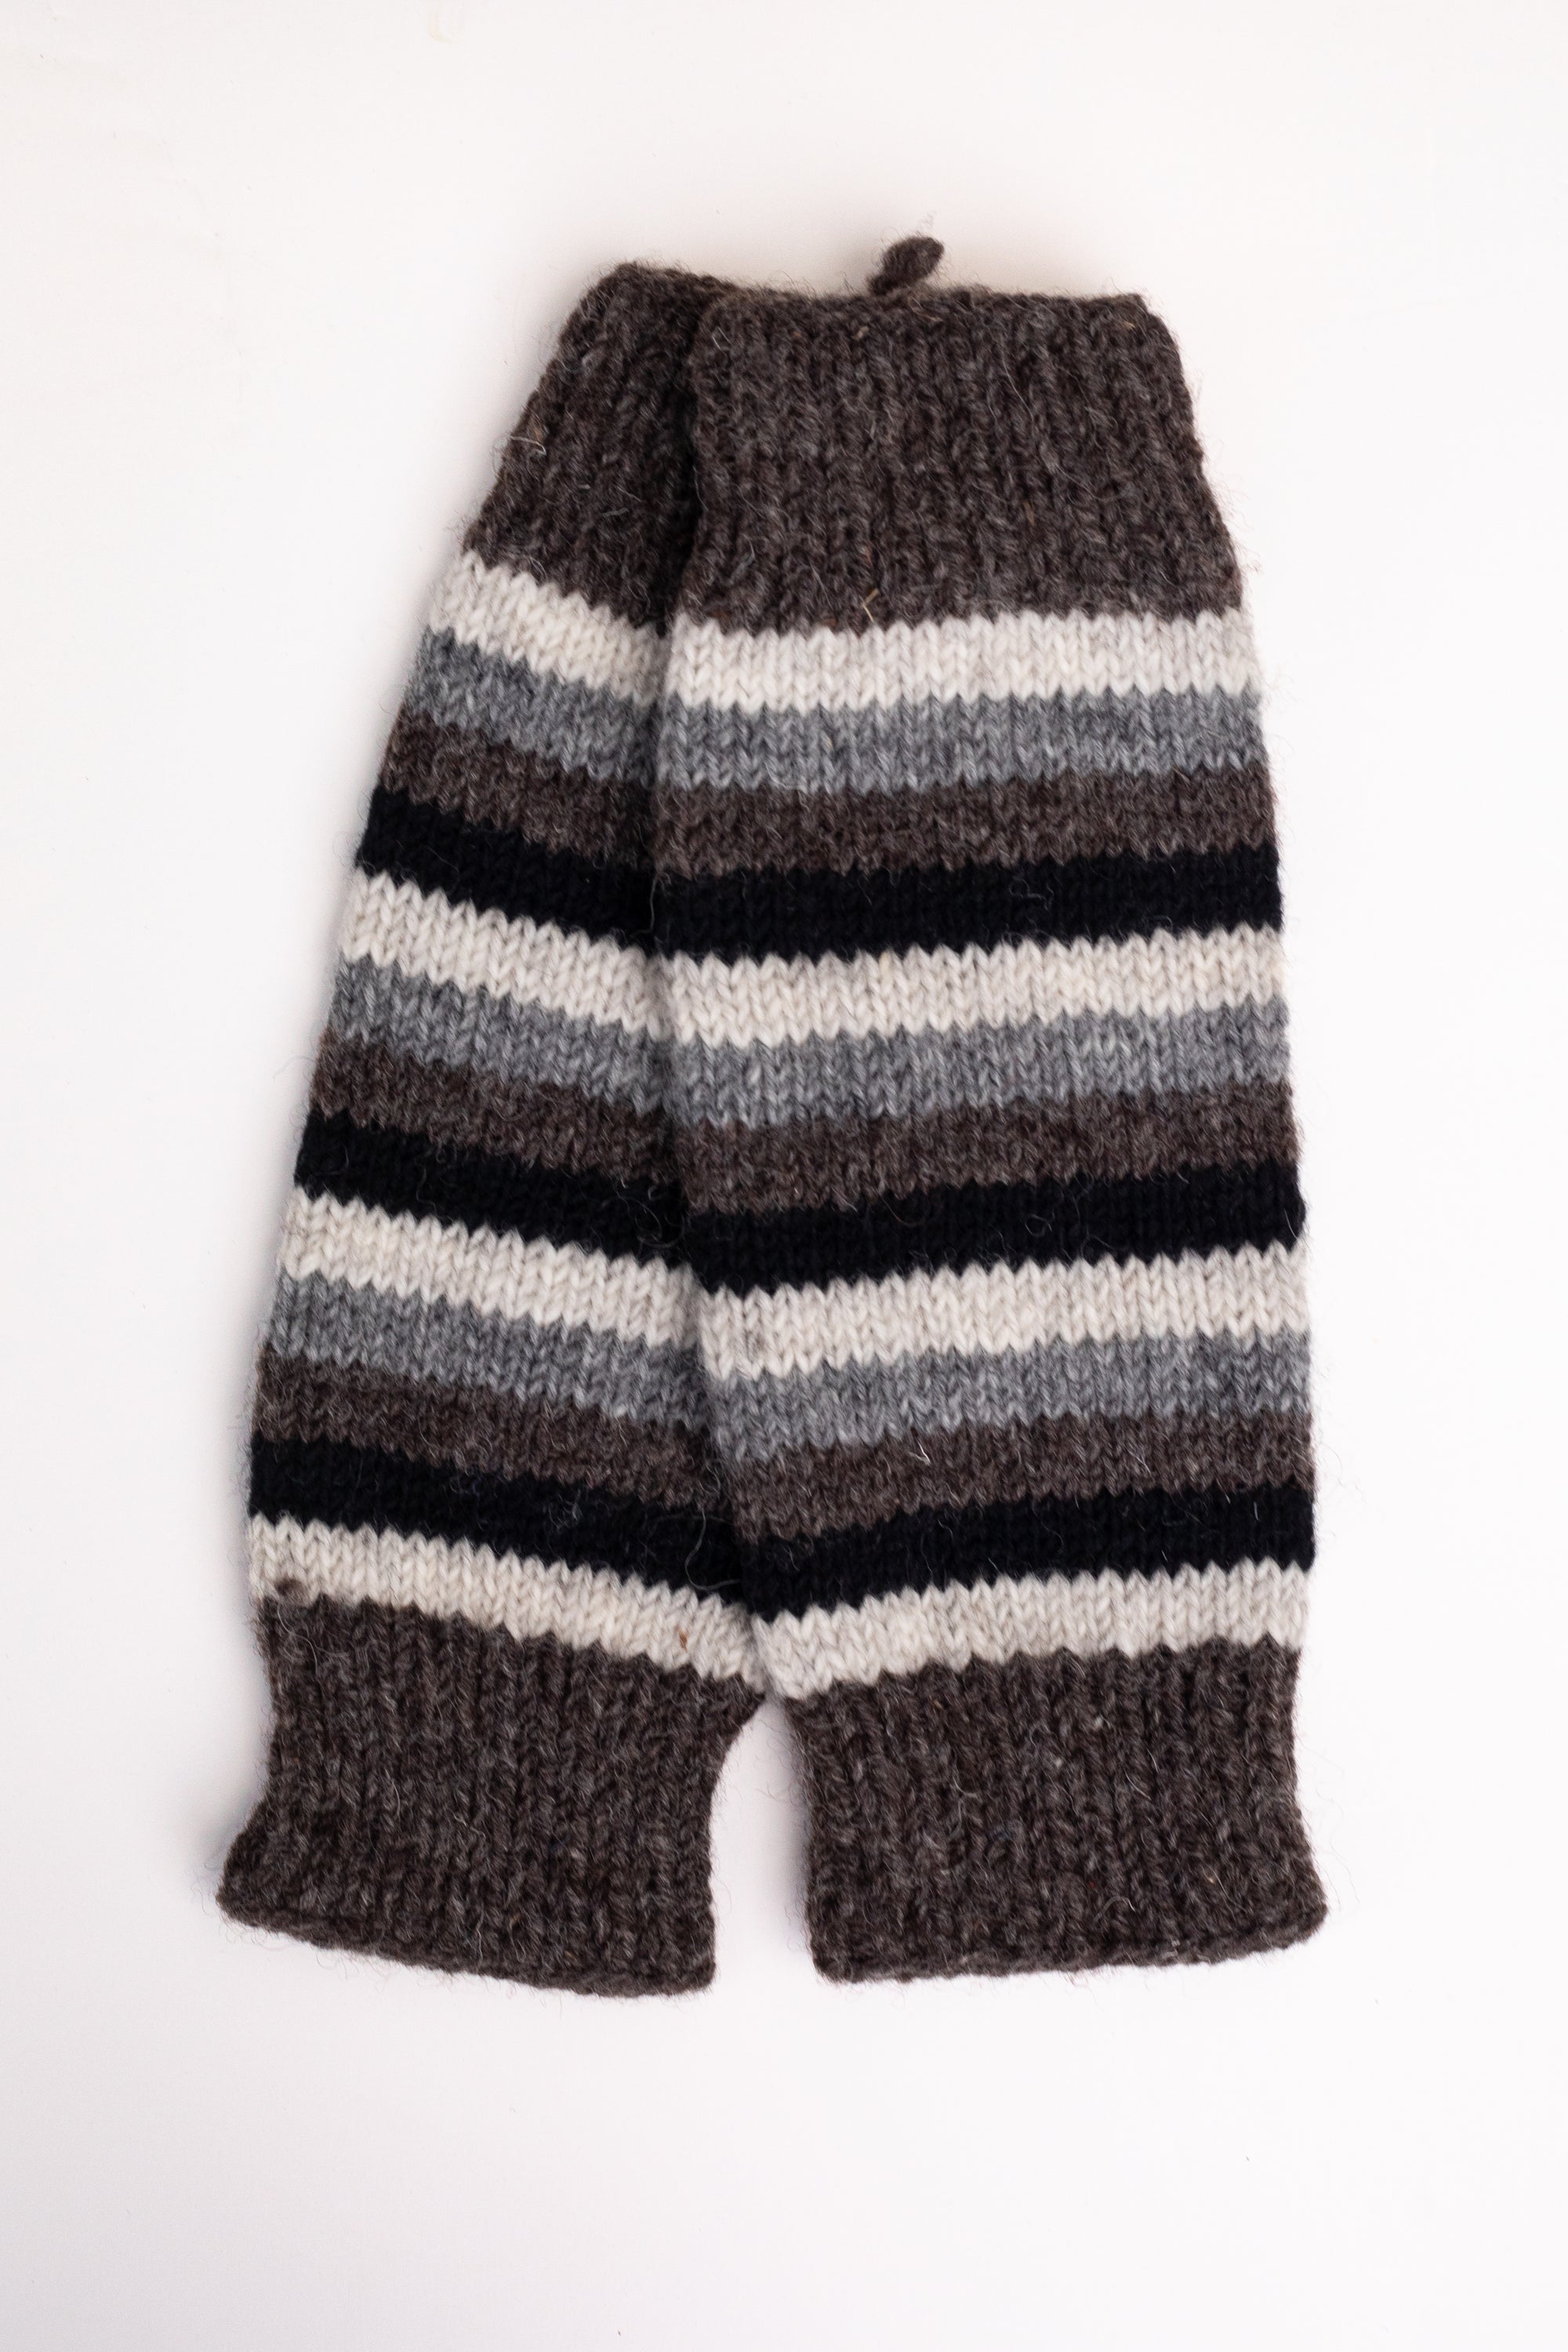 Striped Wool Legwarmers (Grey) - Made in Nepal